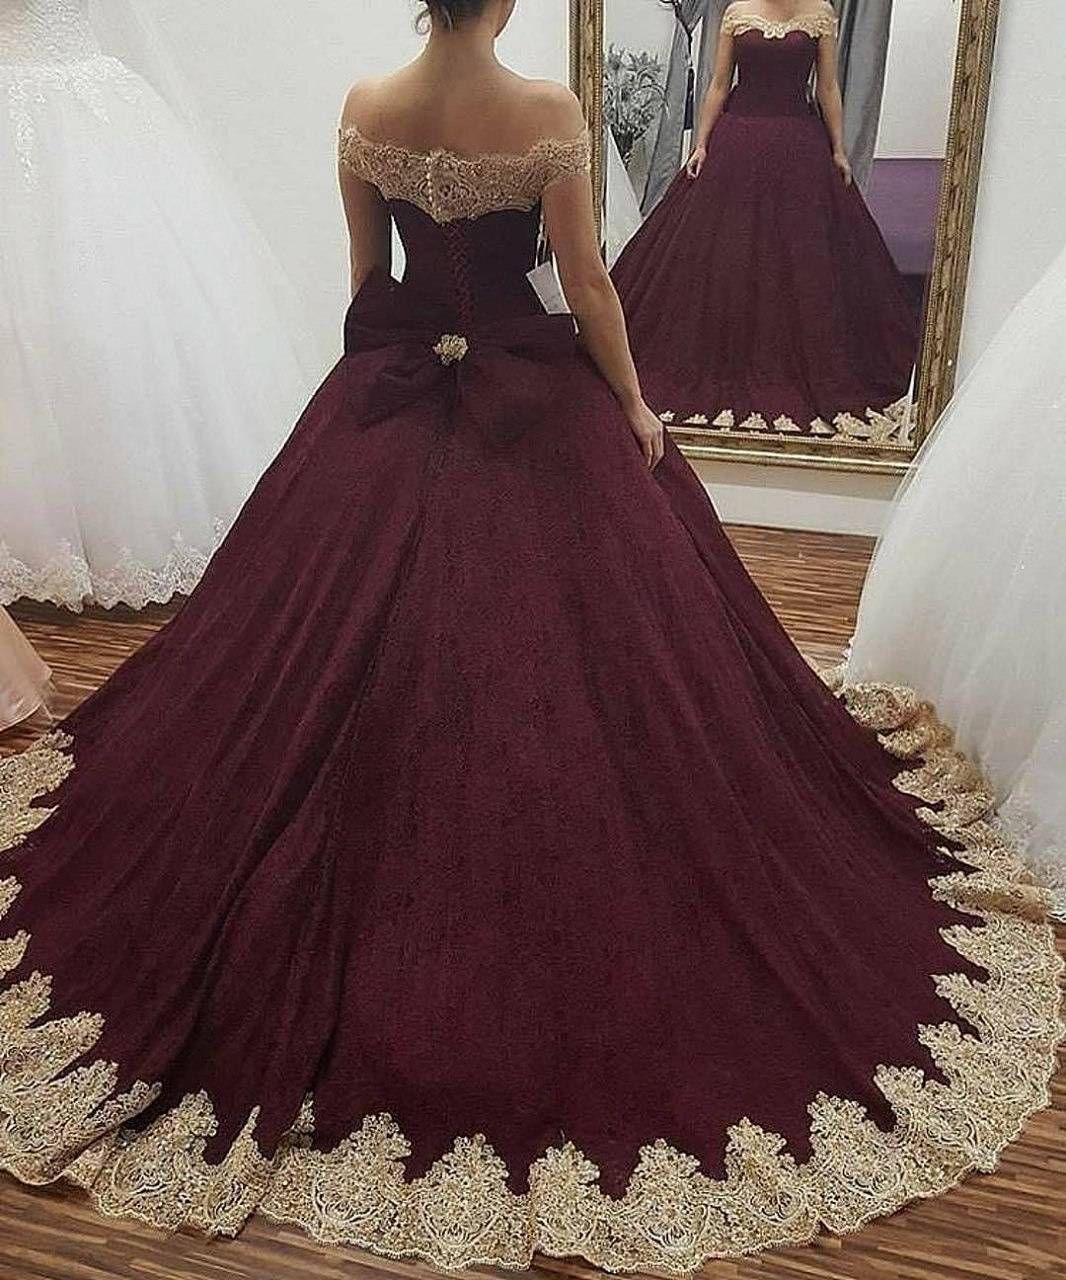 gold and burgundy wedding dress